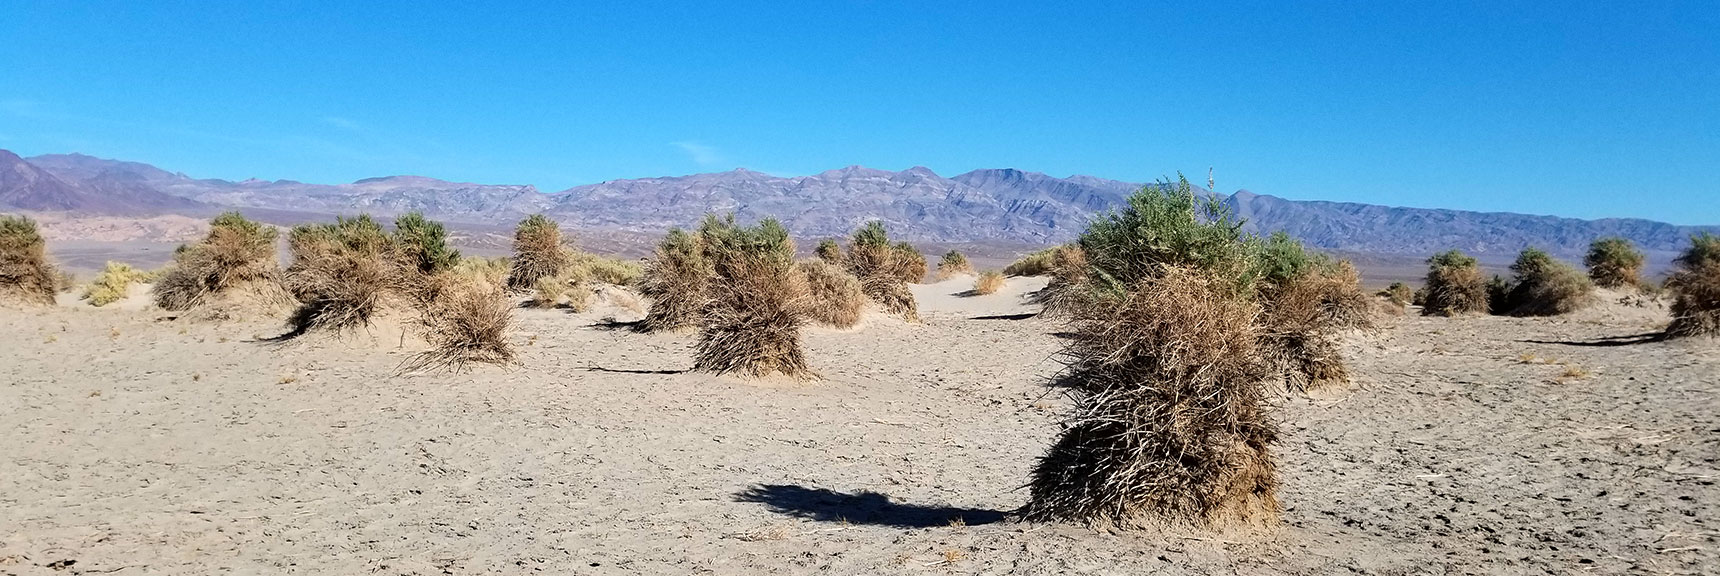 Death Valley National Park Devil's Cornfield November 24th 2018